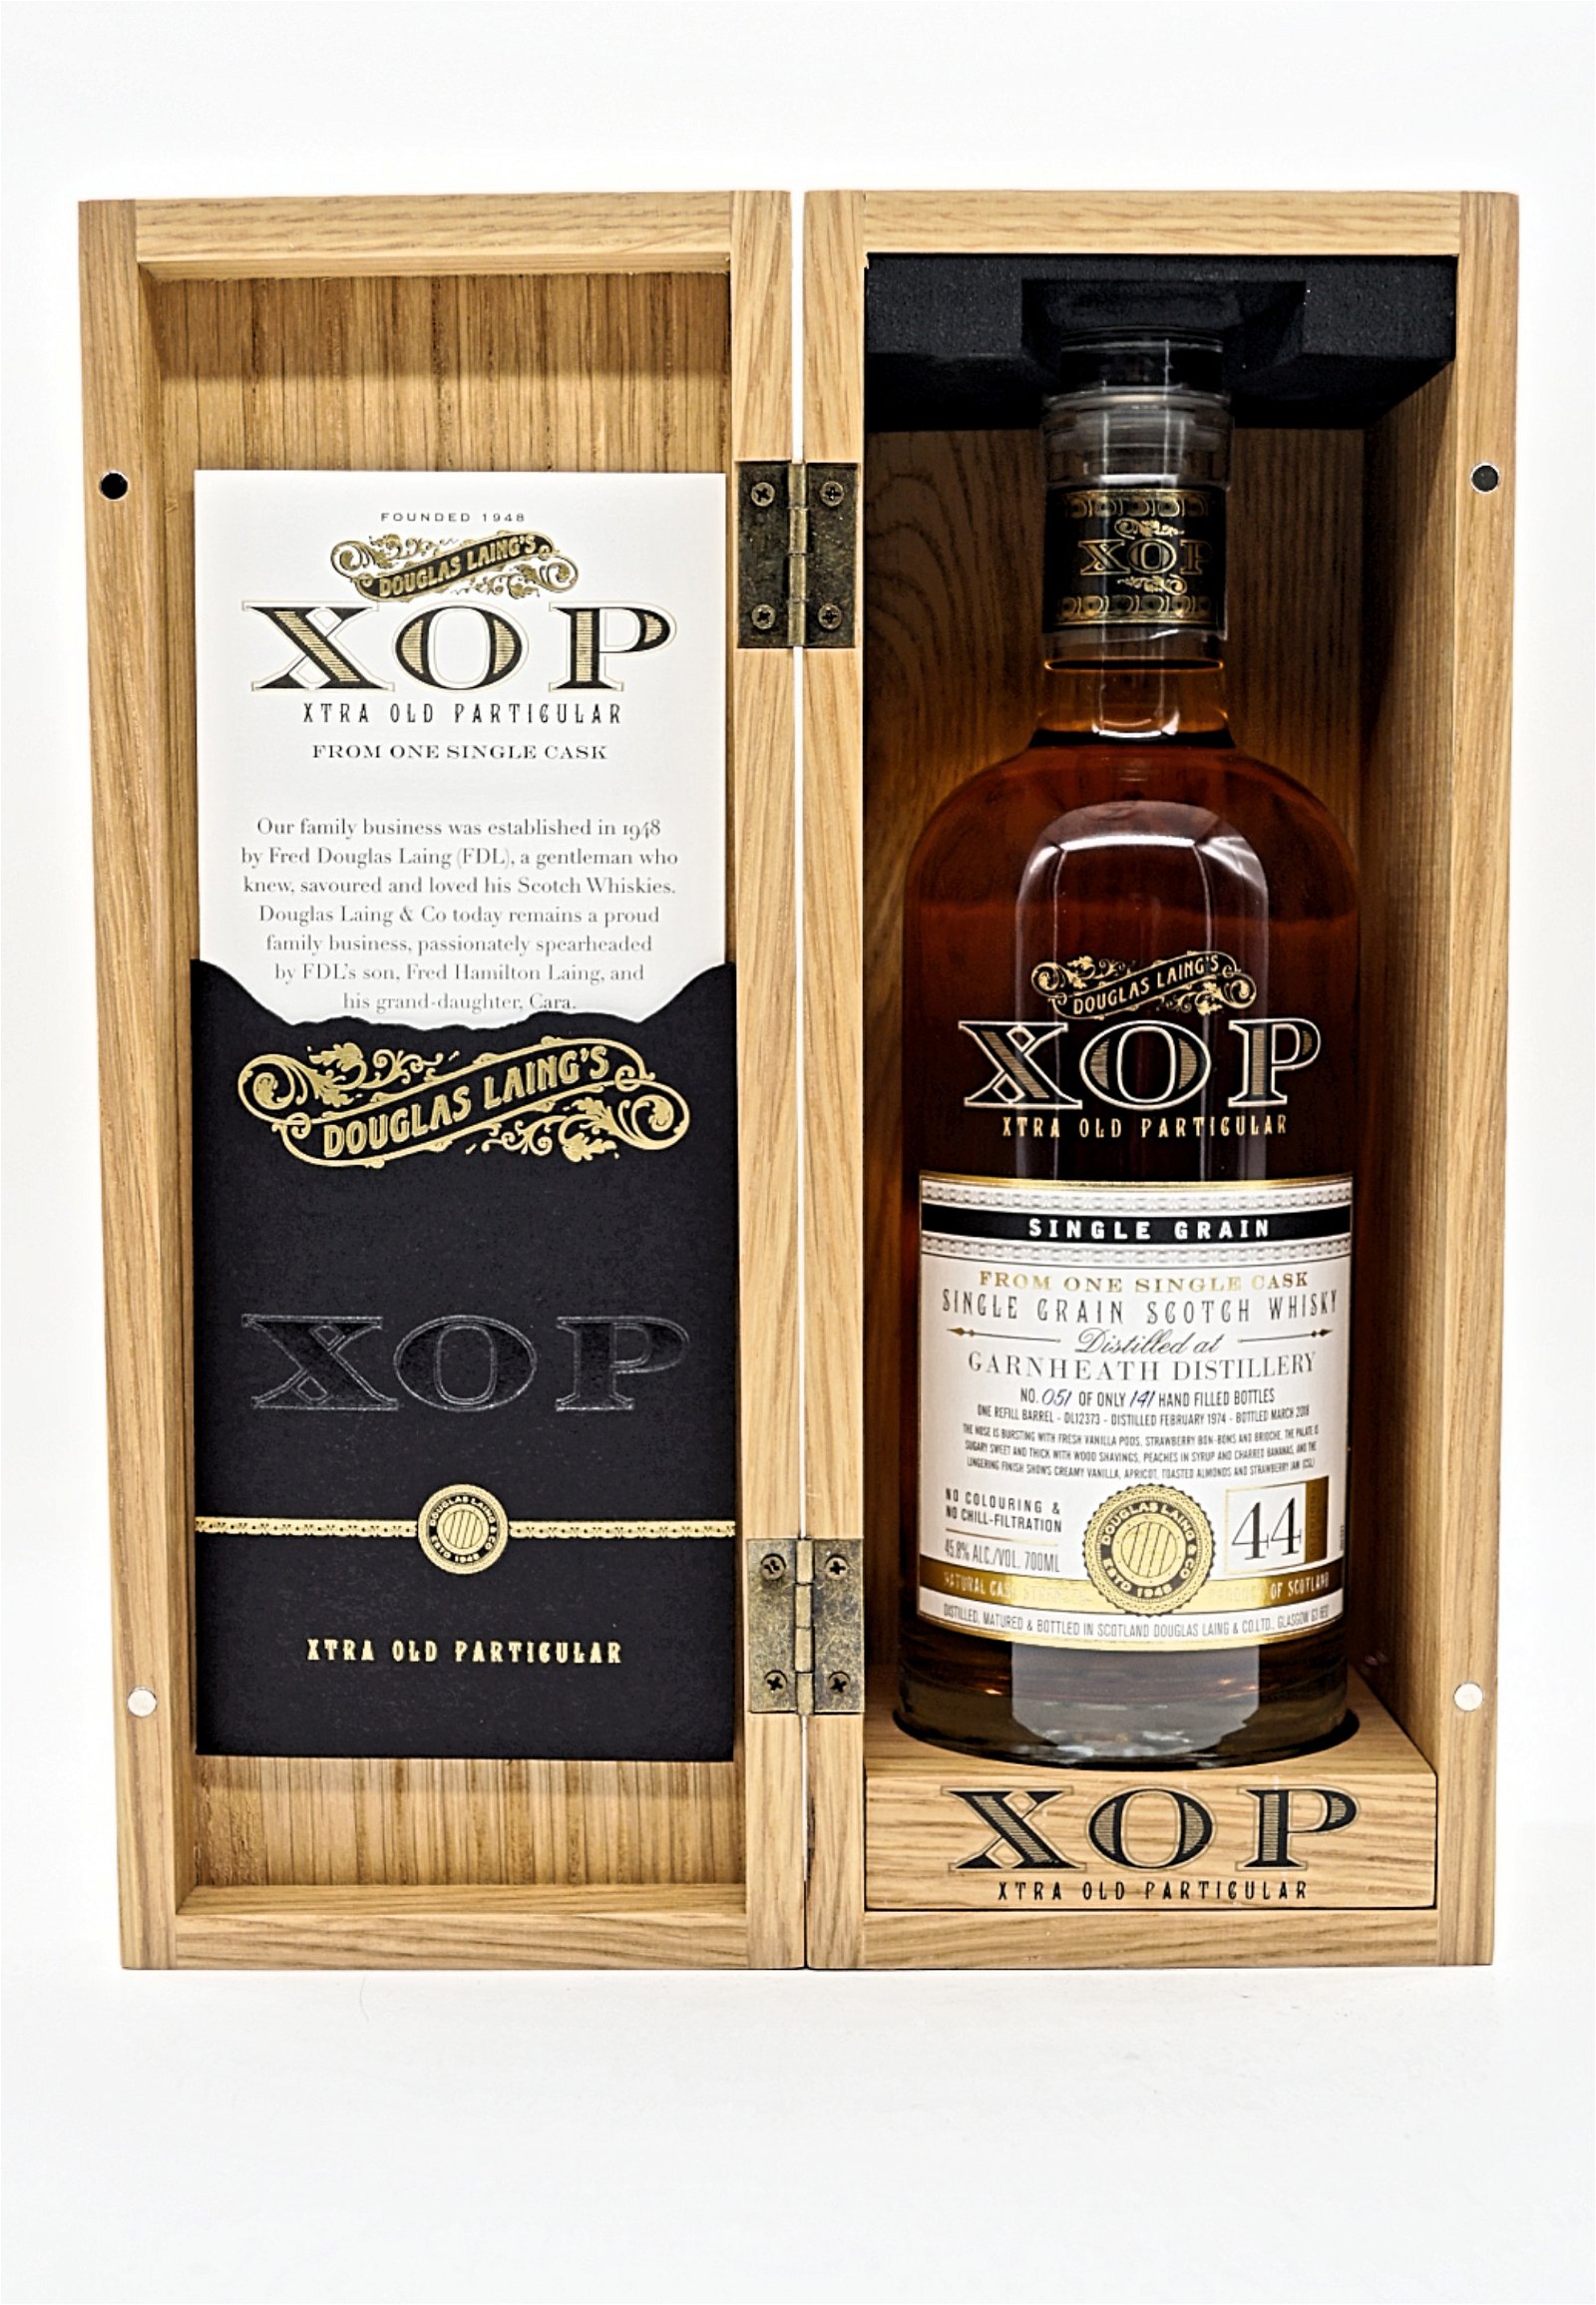 XOP Xtra Old Particular Garnheath 44 Jahre 1974/2018 Flasche No. 51/141 Single Cask Single Grain Scotch Whisky 